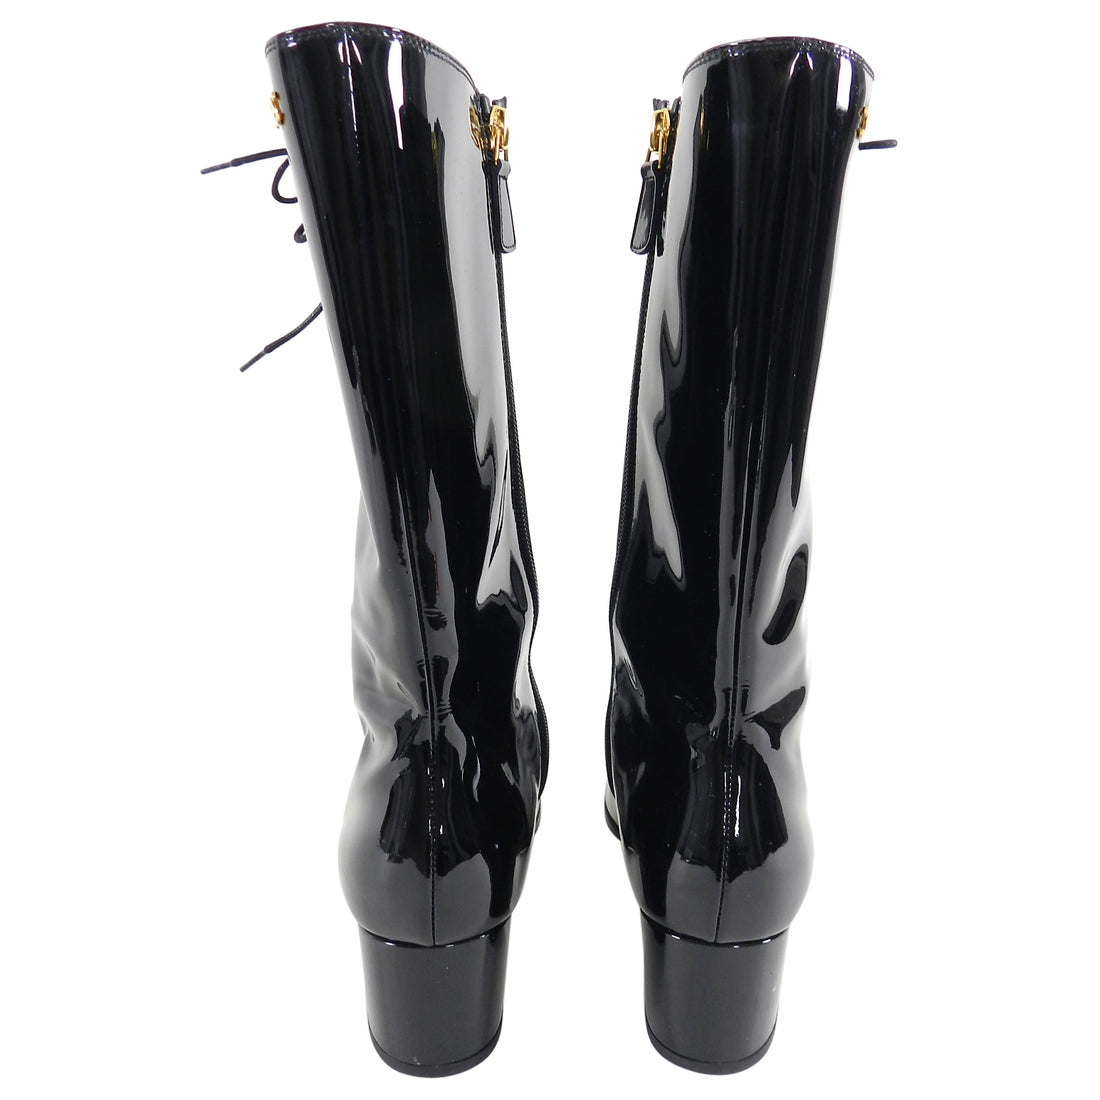 Chanel Pre-Fall 2015 Salzburg Black Patent Lace Up Midi Boots - 41